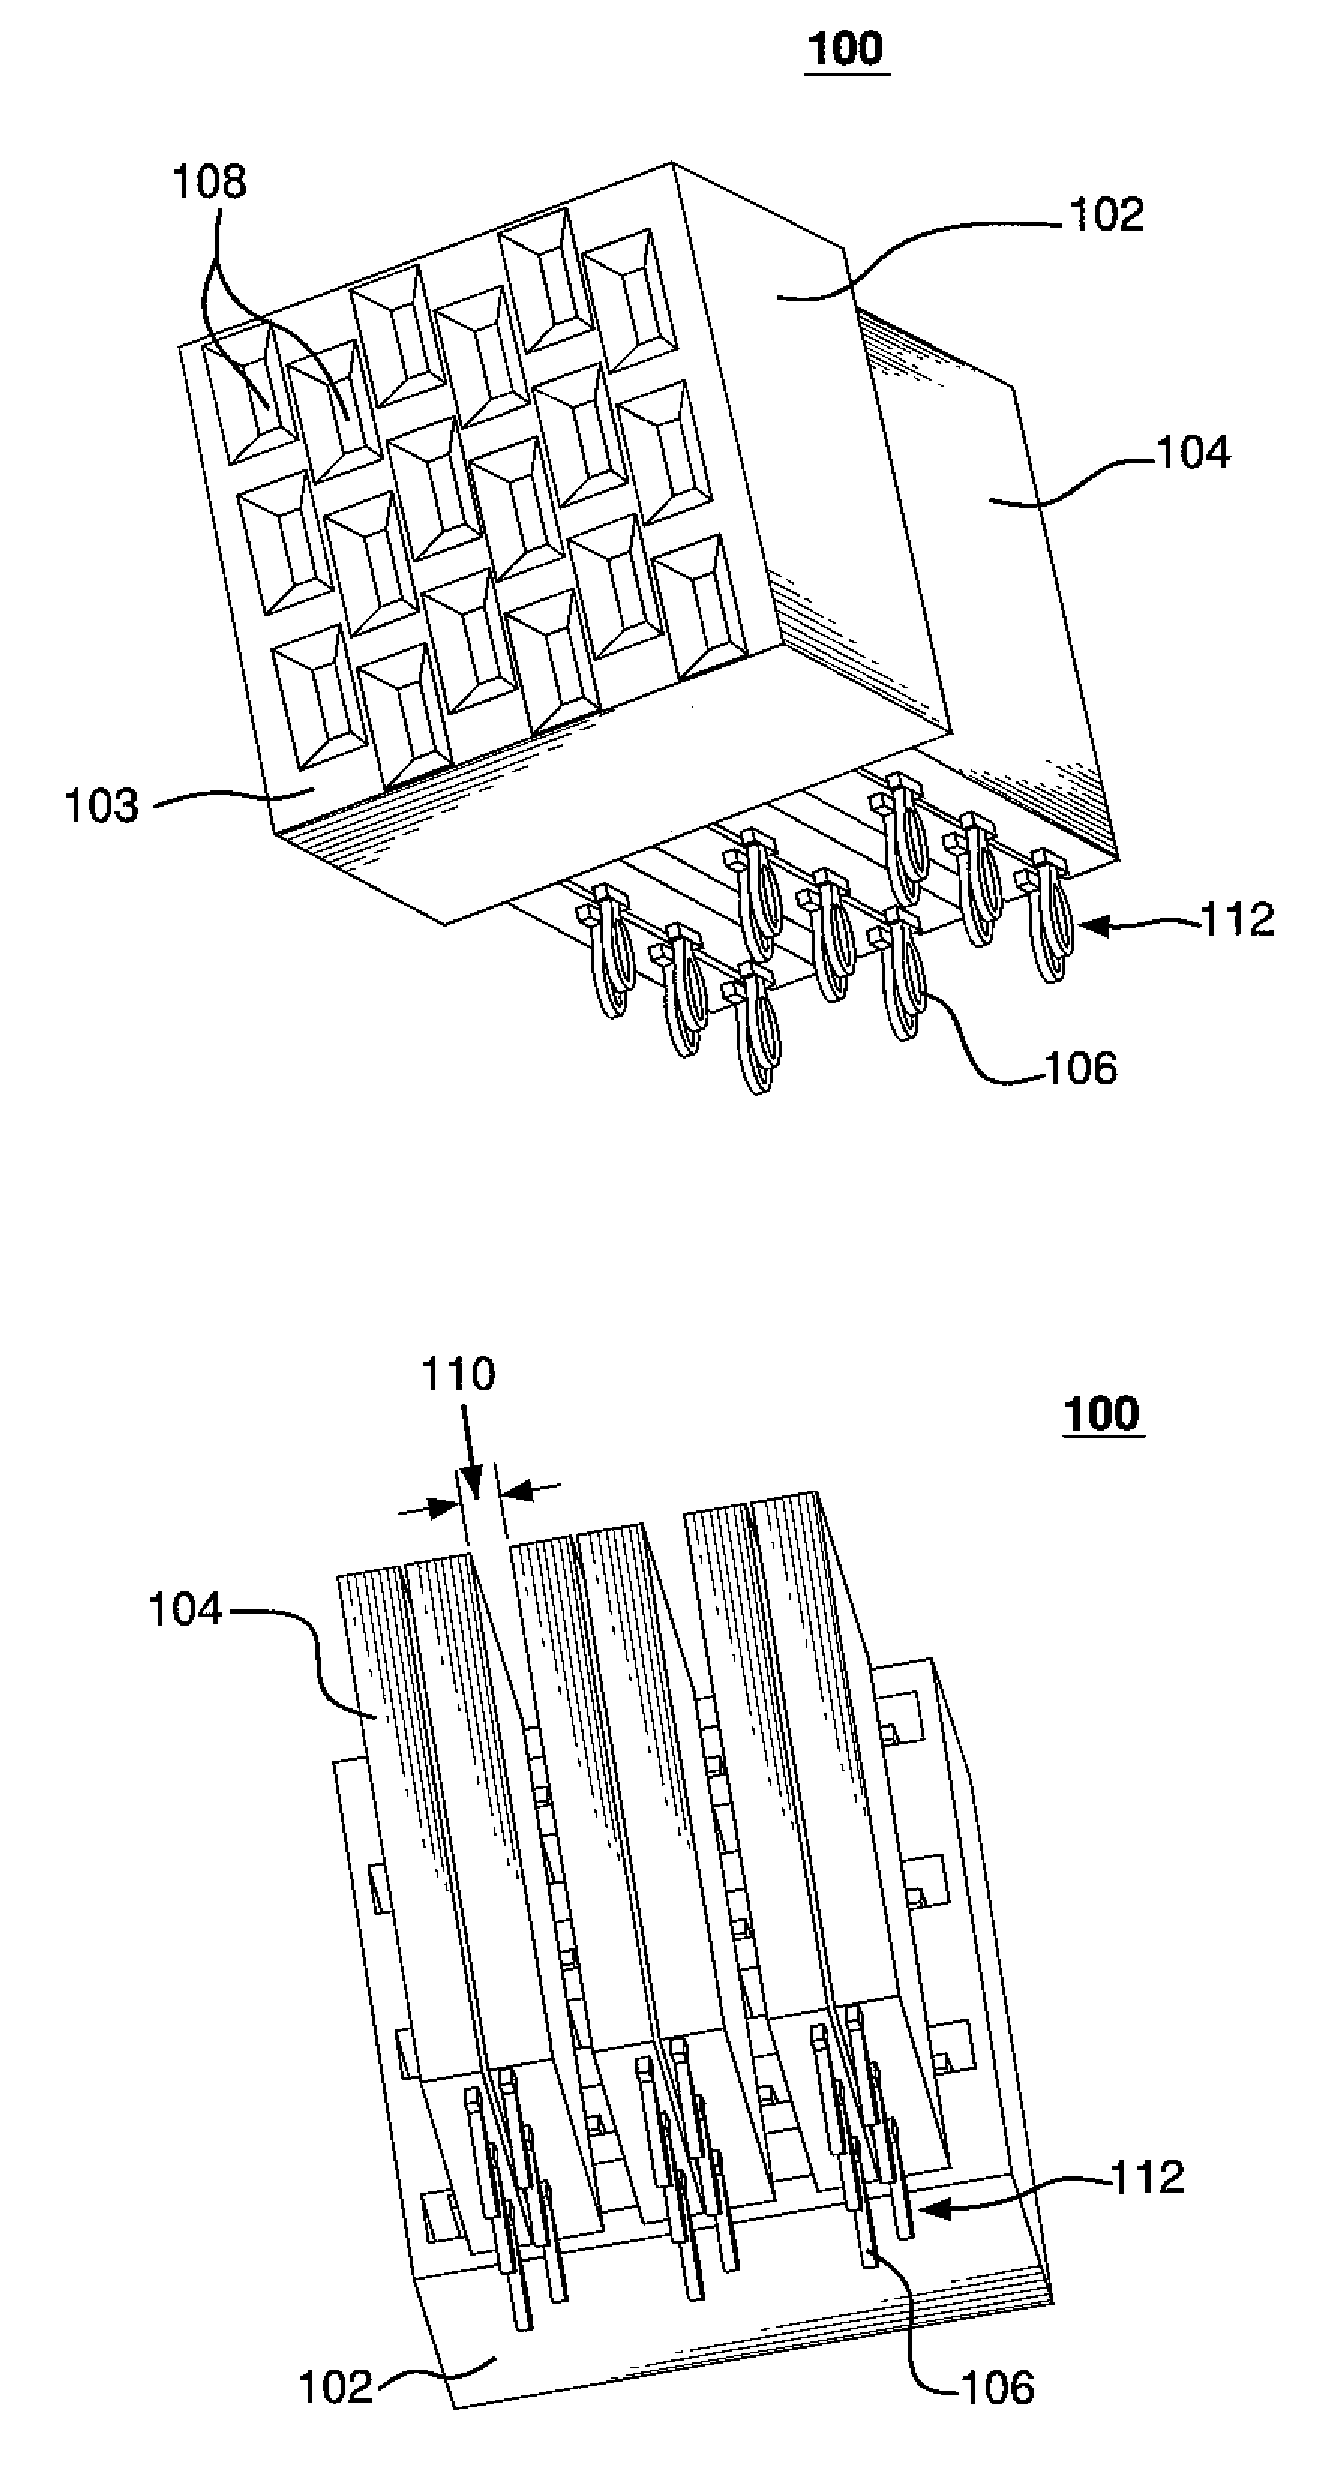 High-density orthogonal connector